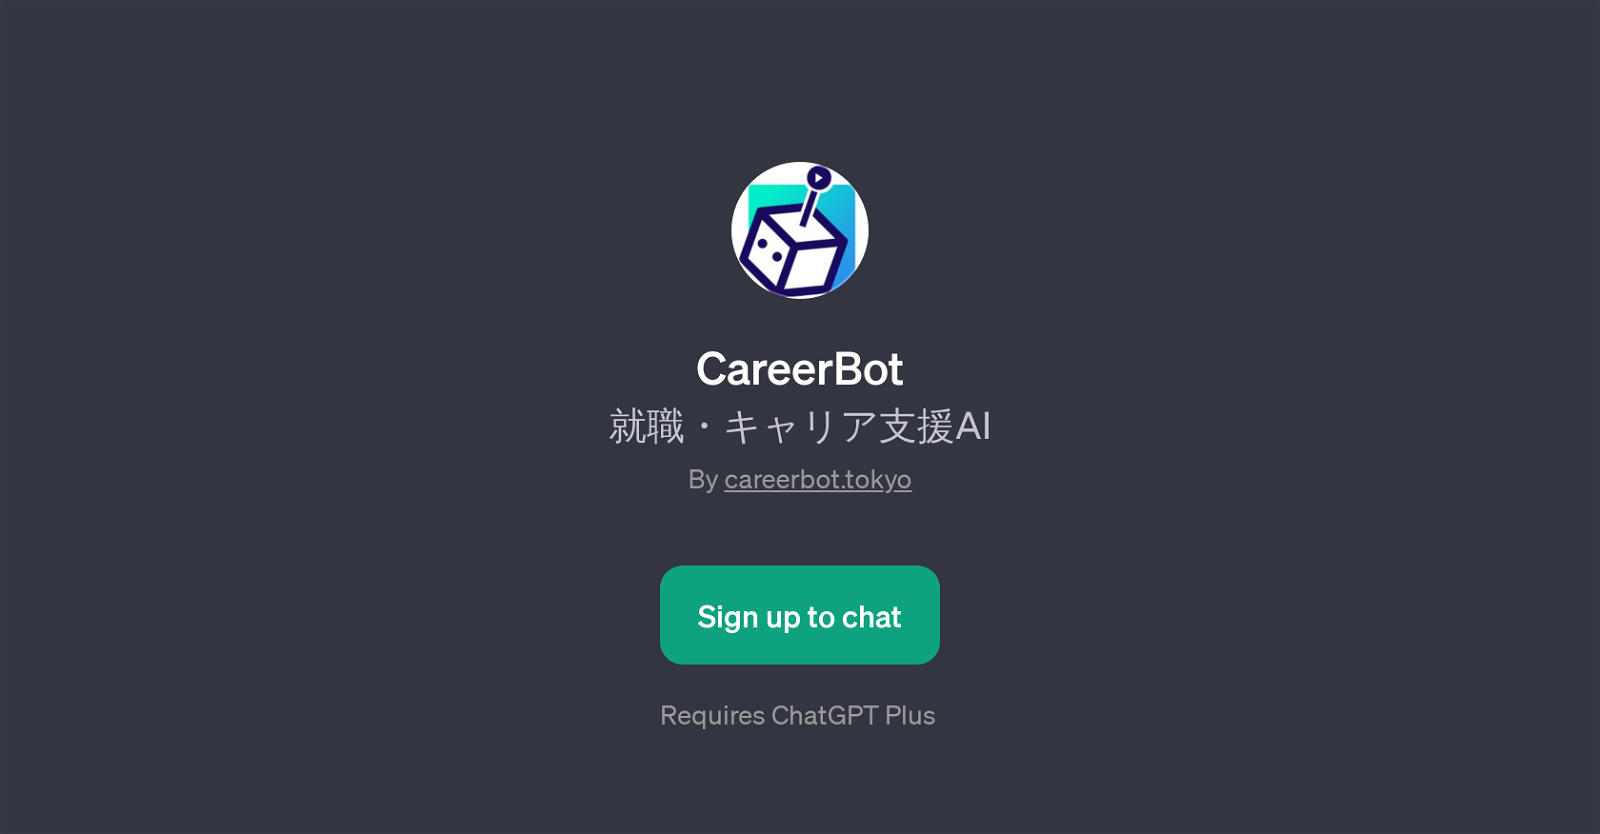 CareerBot website